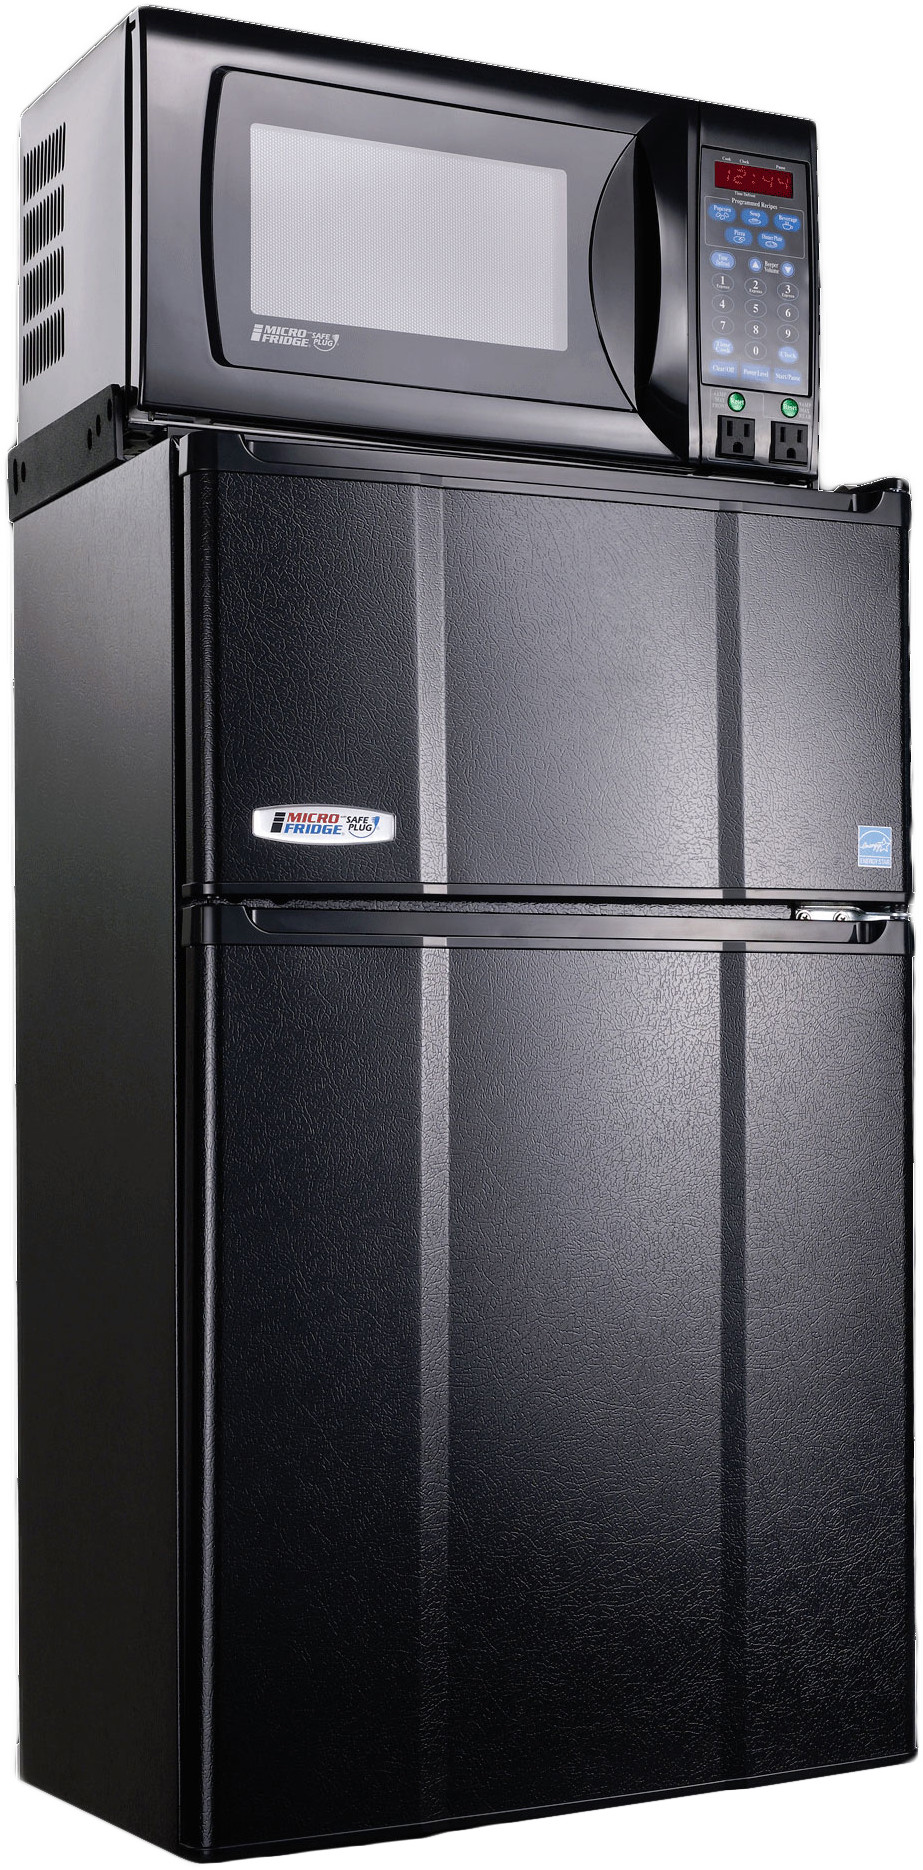 MicroFridge 30MF47TP 3.0 cu. ft. Top-Mount Refrigerator with 0.7 cu. ft